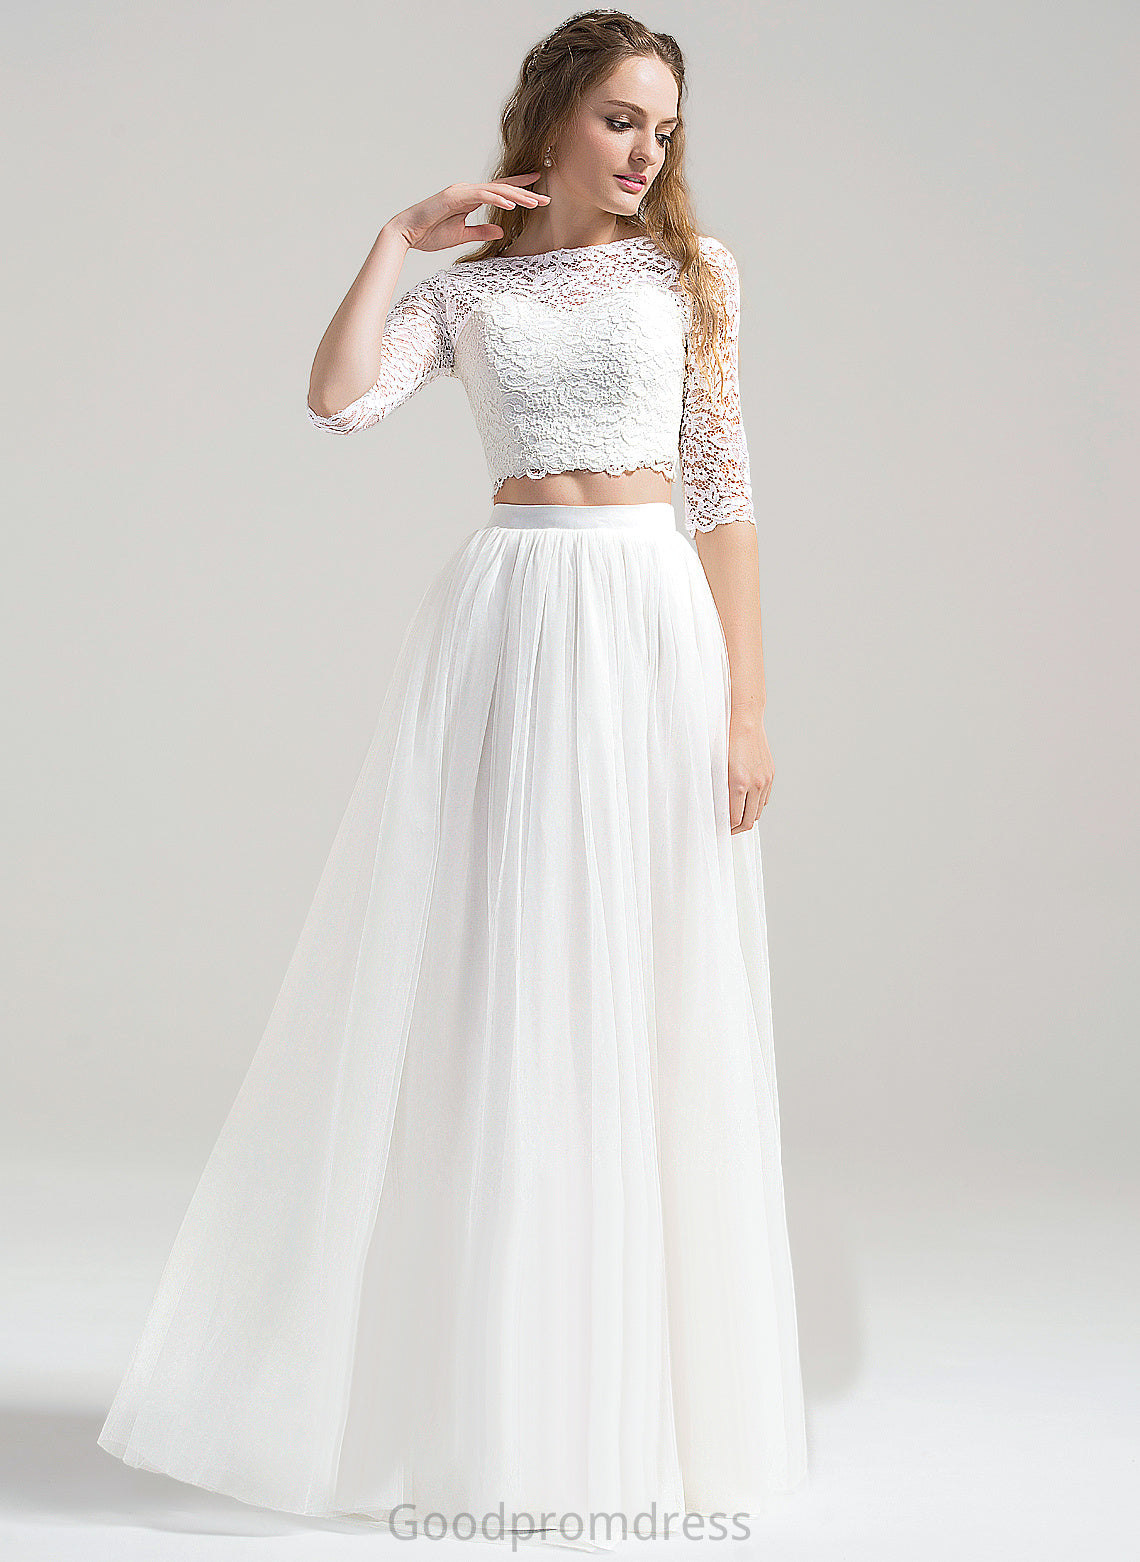 Dress A-Line Wedding Jaiden Wedding Dresses Floor-Length Tulle Lace